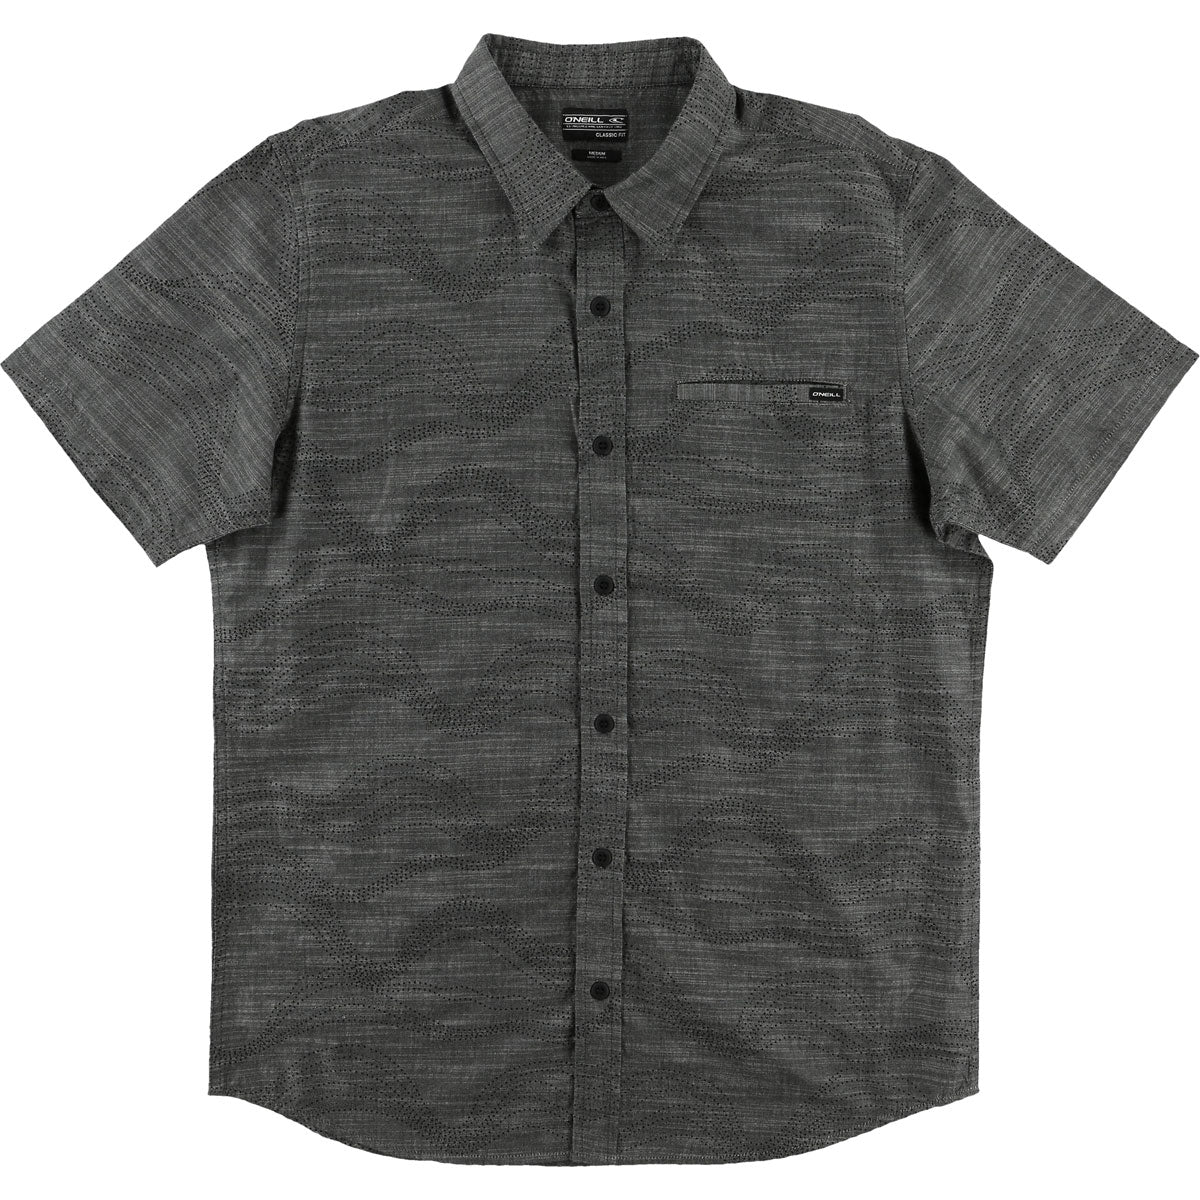 O'Neill Walkabout Men's Button Up Short-Sleeve Shirts - Black